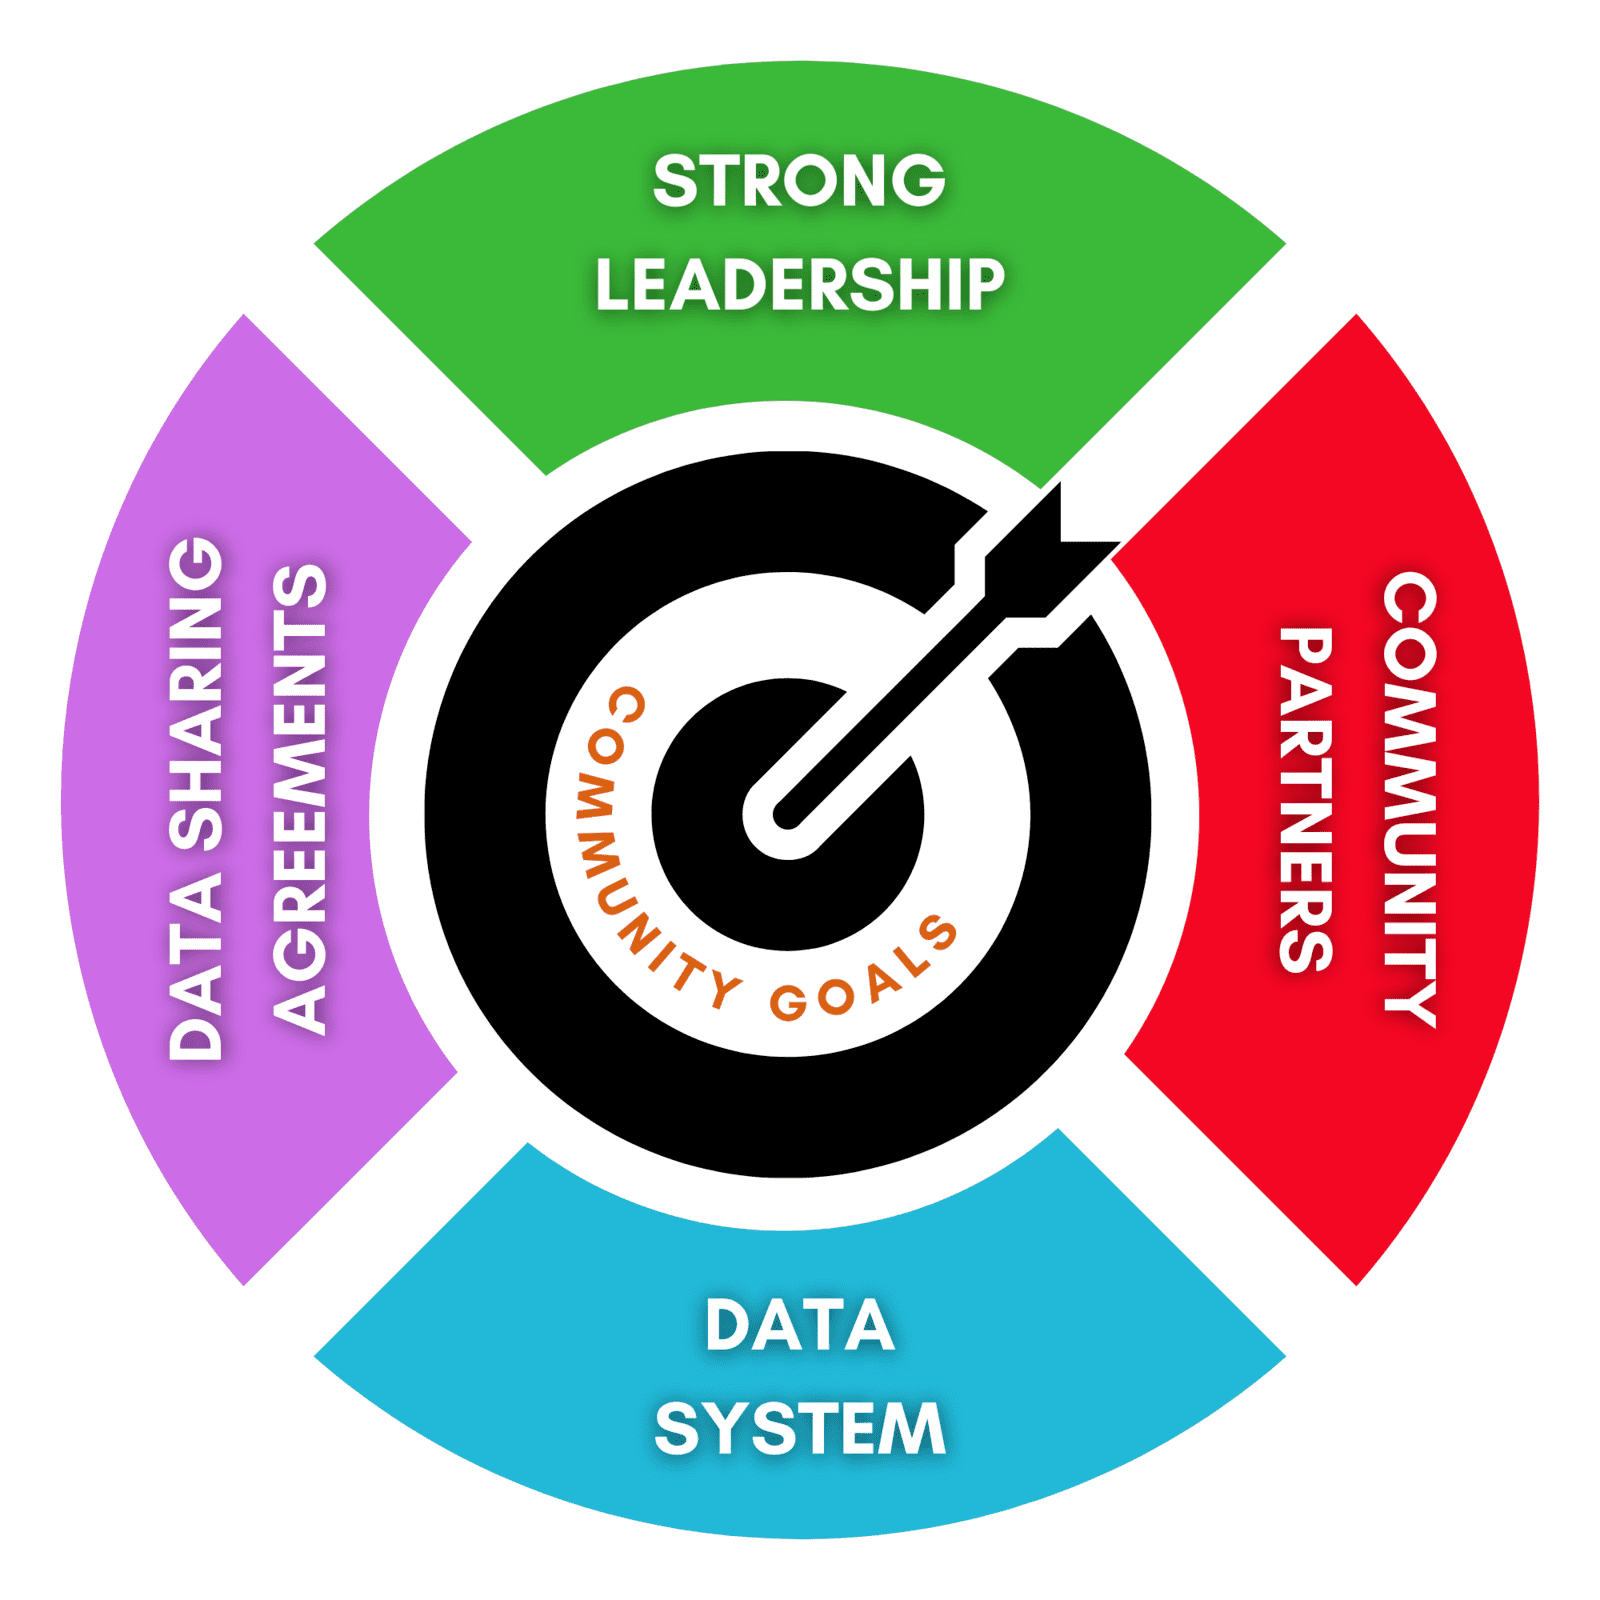 community goals diagram for data sharing